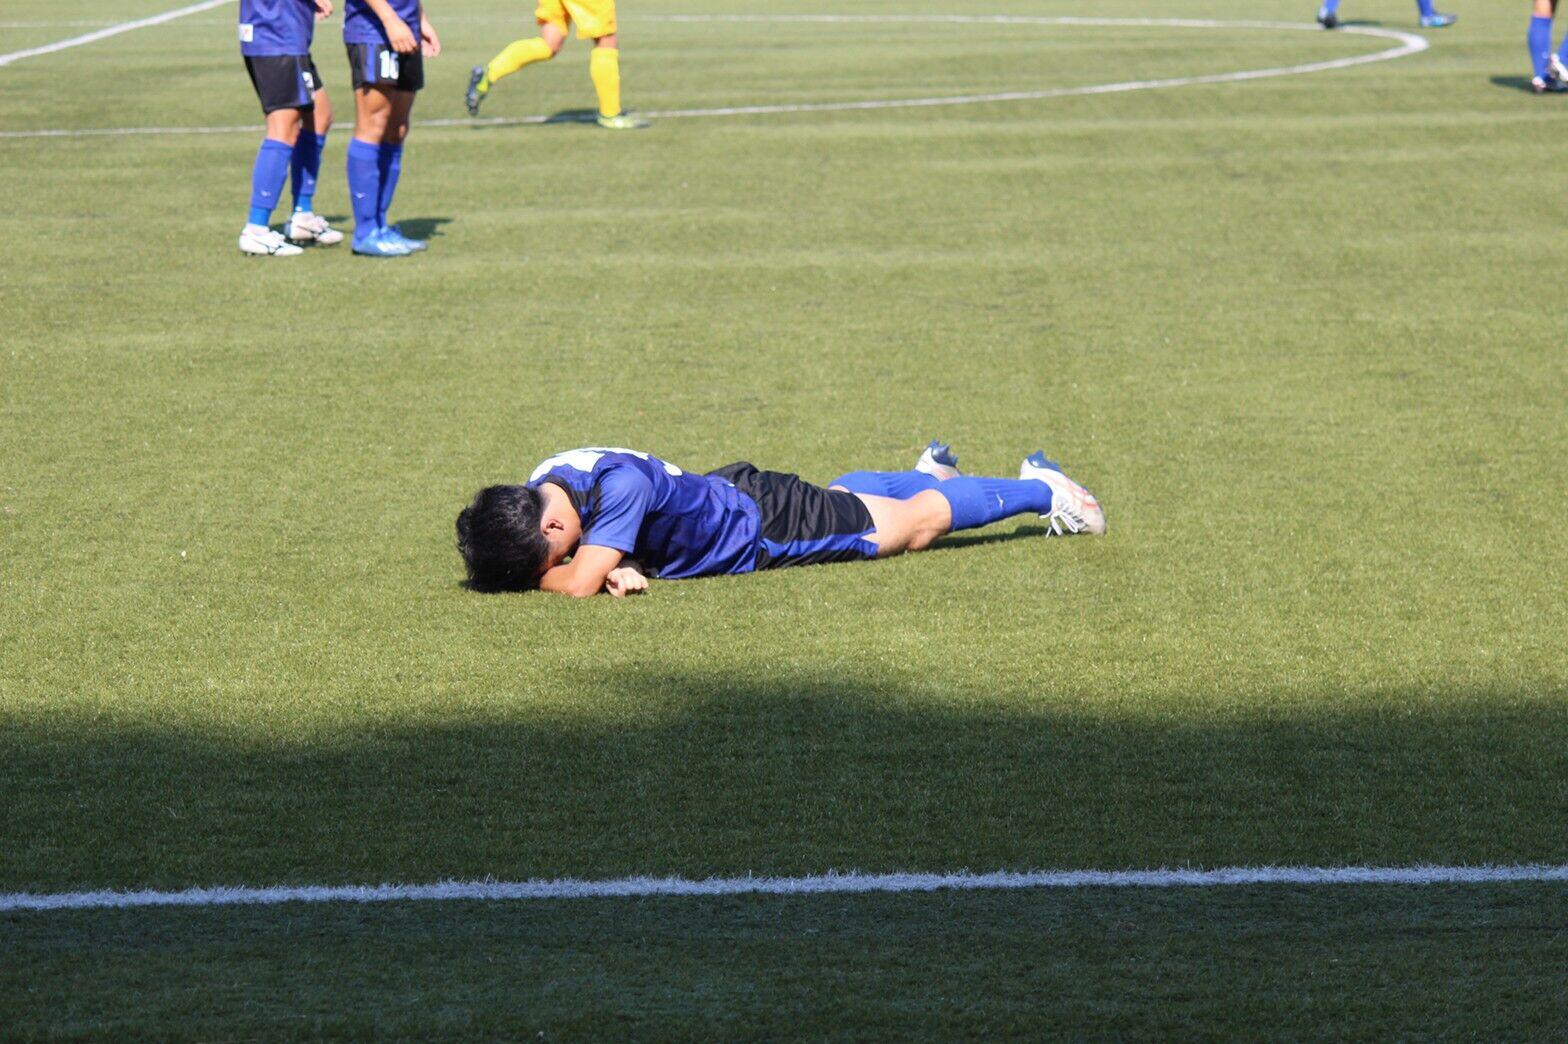 https://football.ku-sports.jp/blog/photoreport/images/20200831200920.jpg